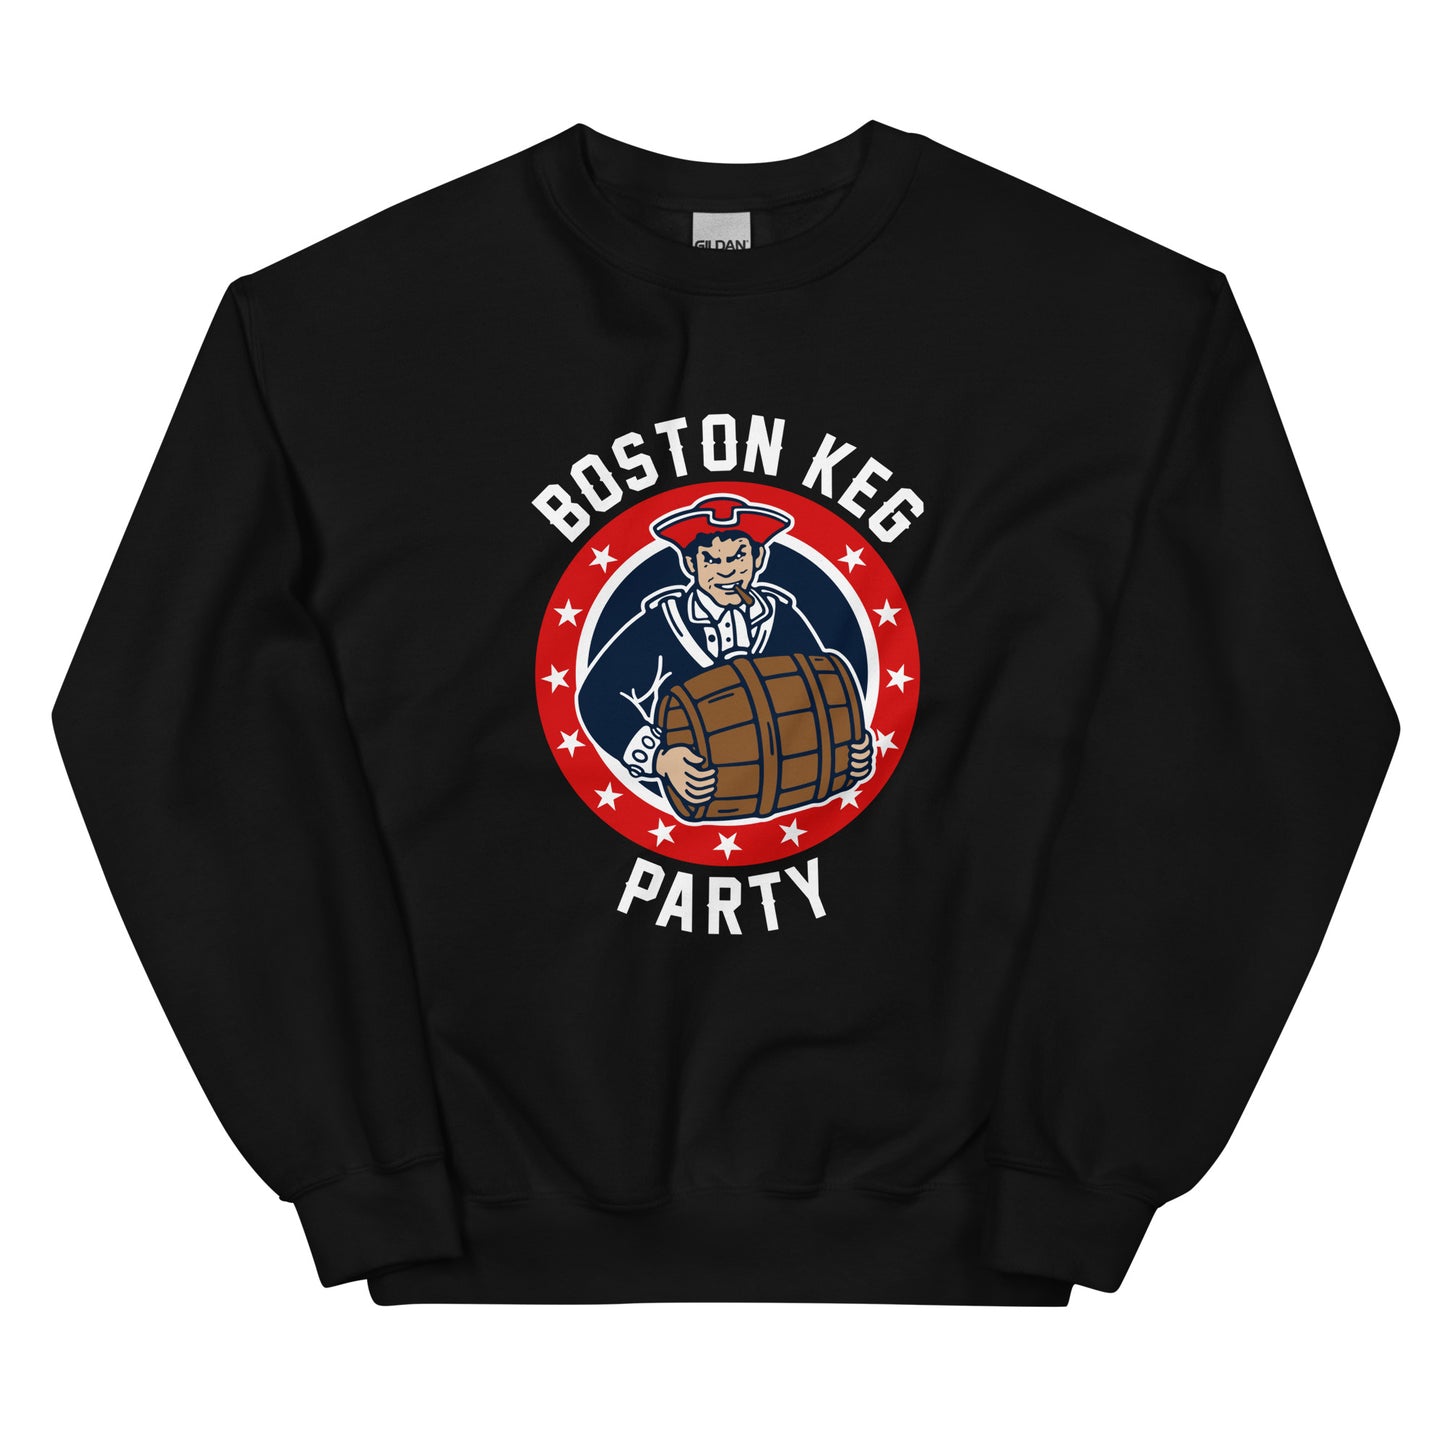 Boston Keg Party Sweatshirt